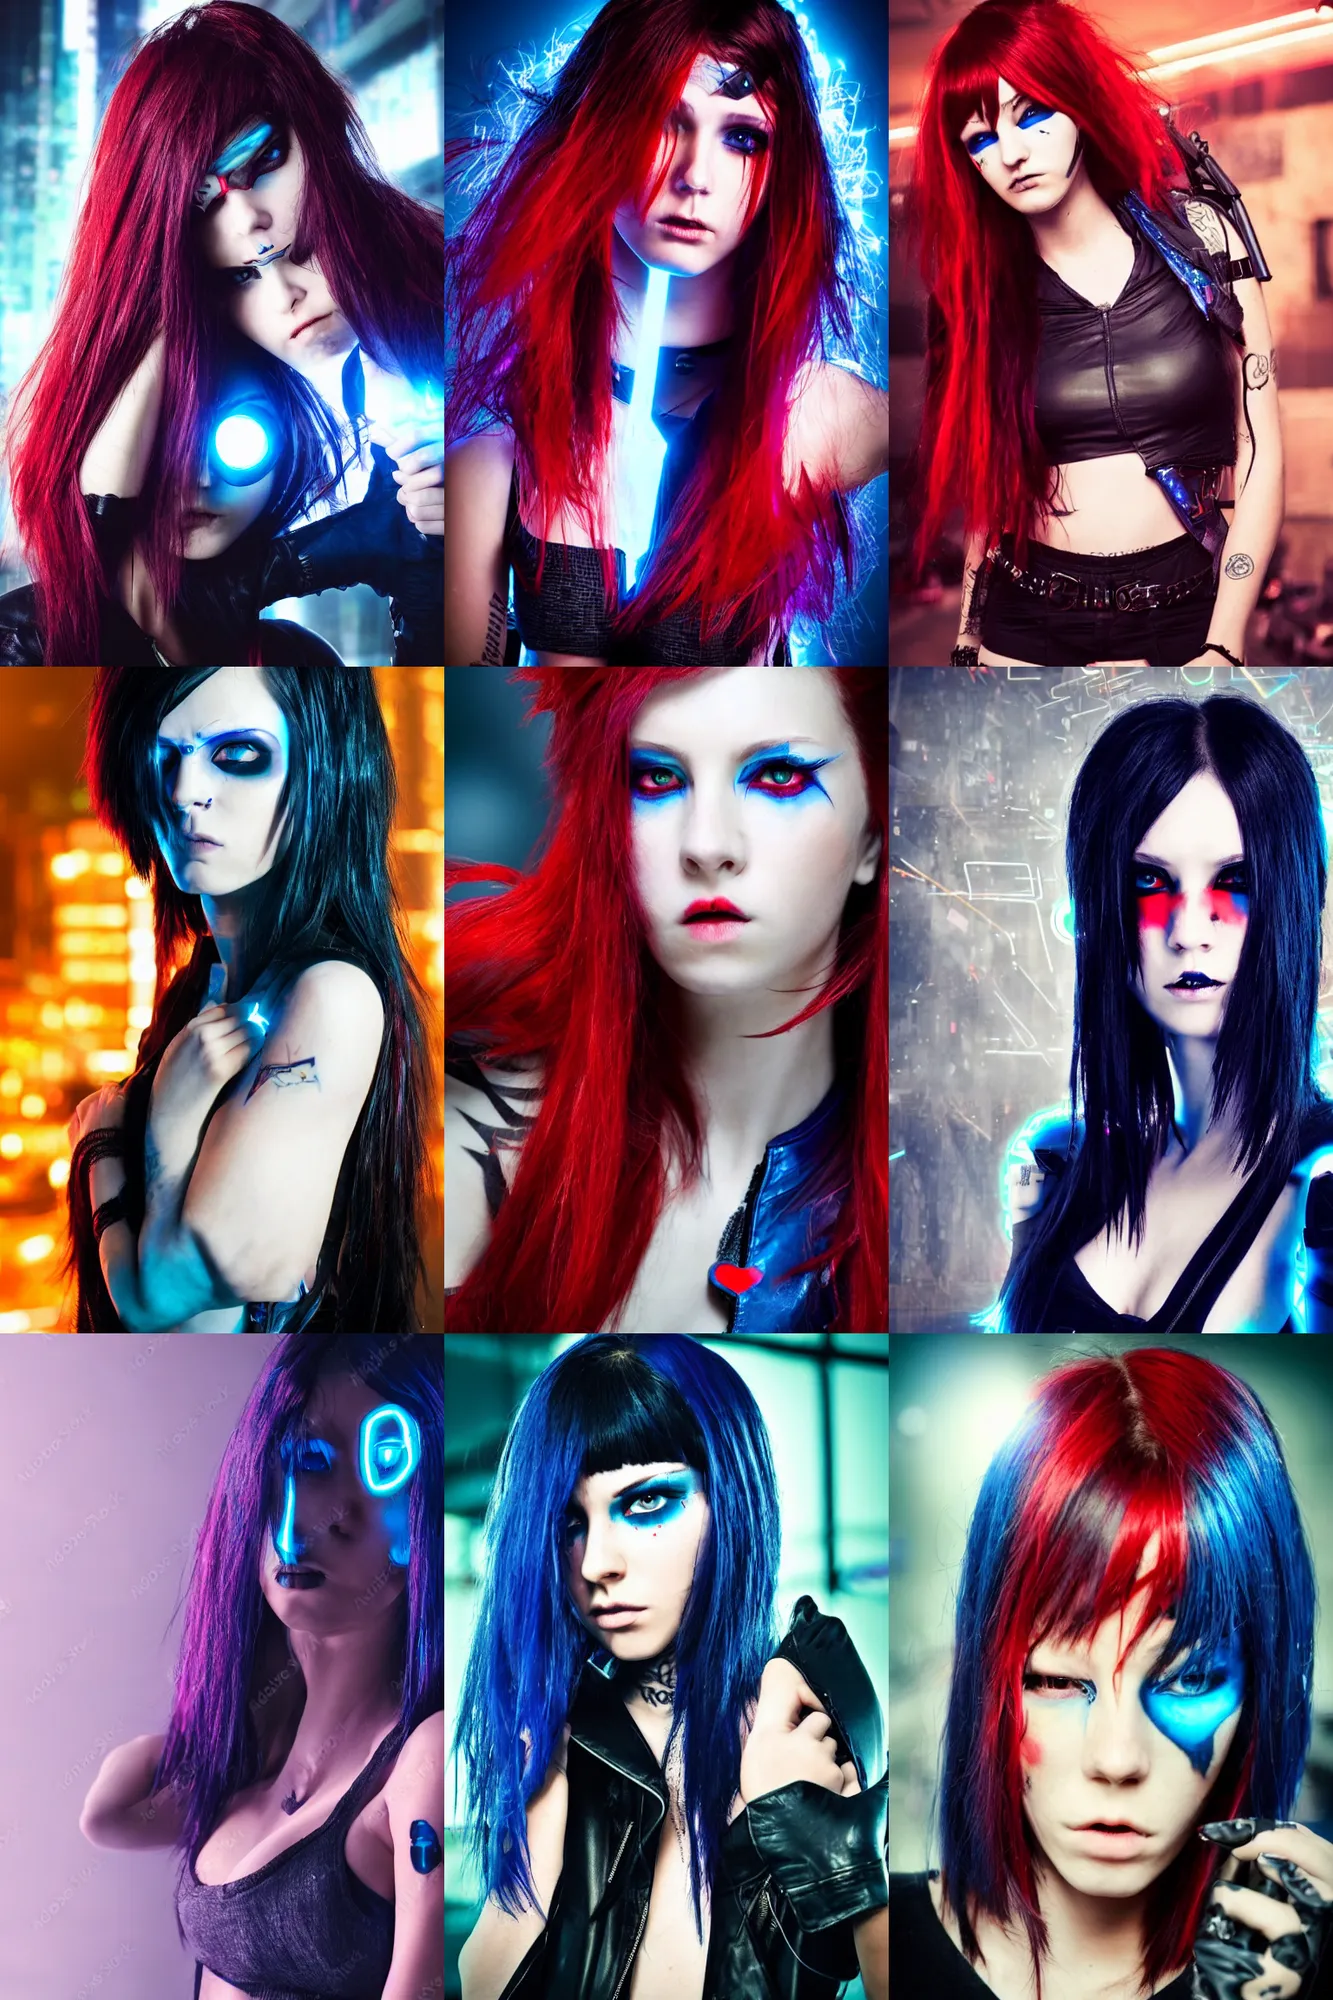 Prompt: cyberpunk emo girl, sexy brunette, blue glowing eyes, prominent cheekbones, red hair